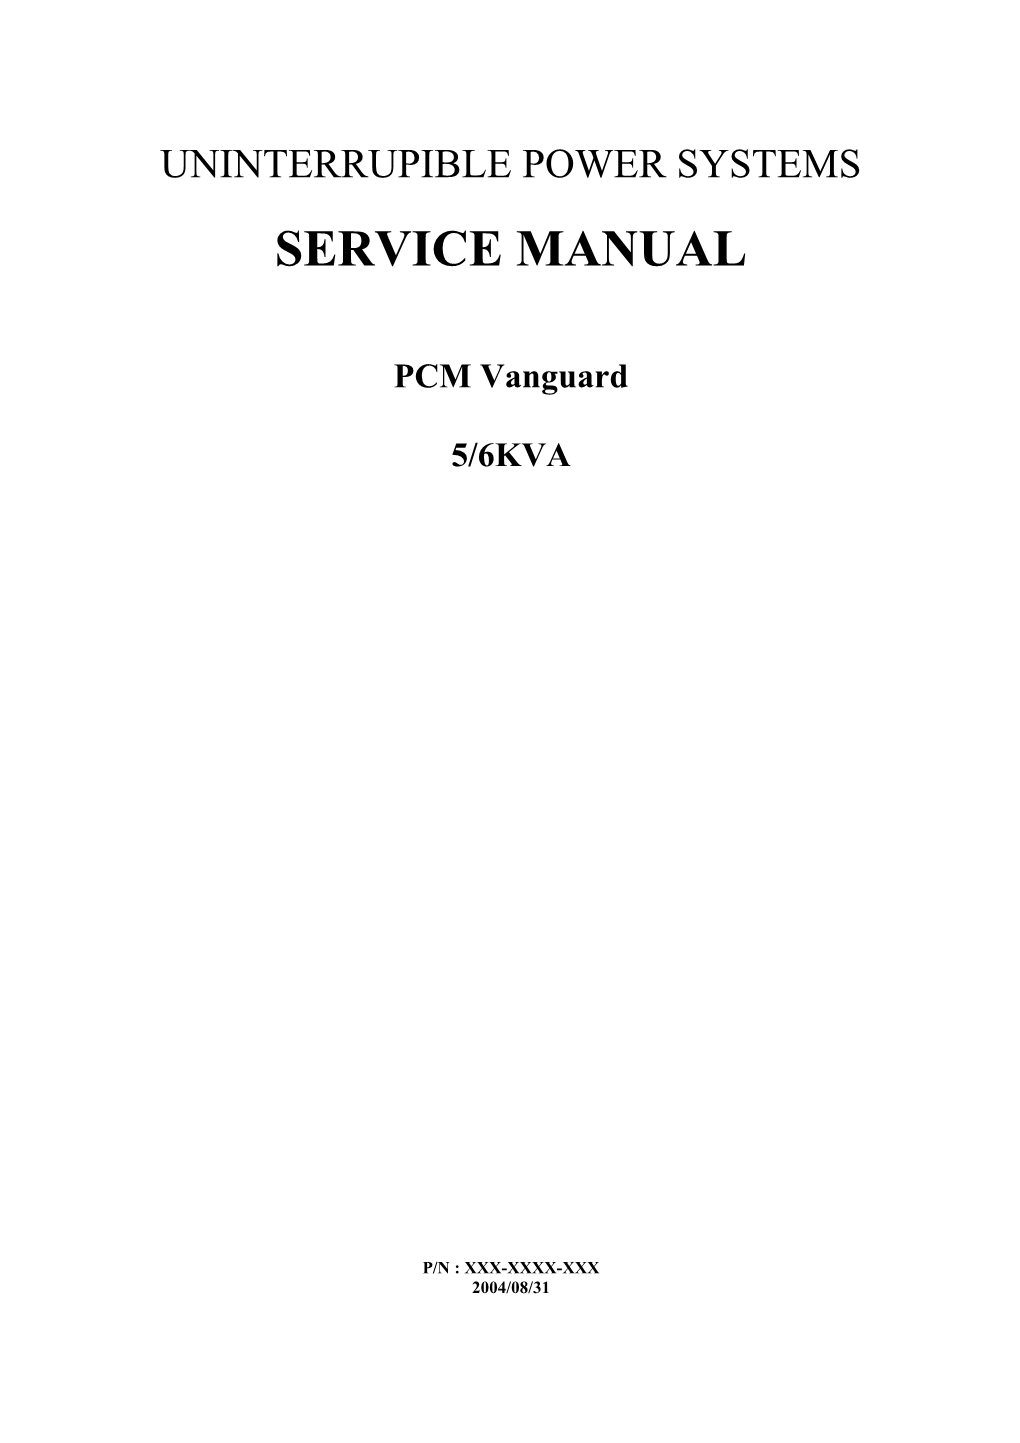 PCM Vanguard 5/6KVA SERVICE MANUAL